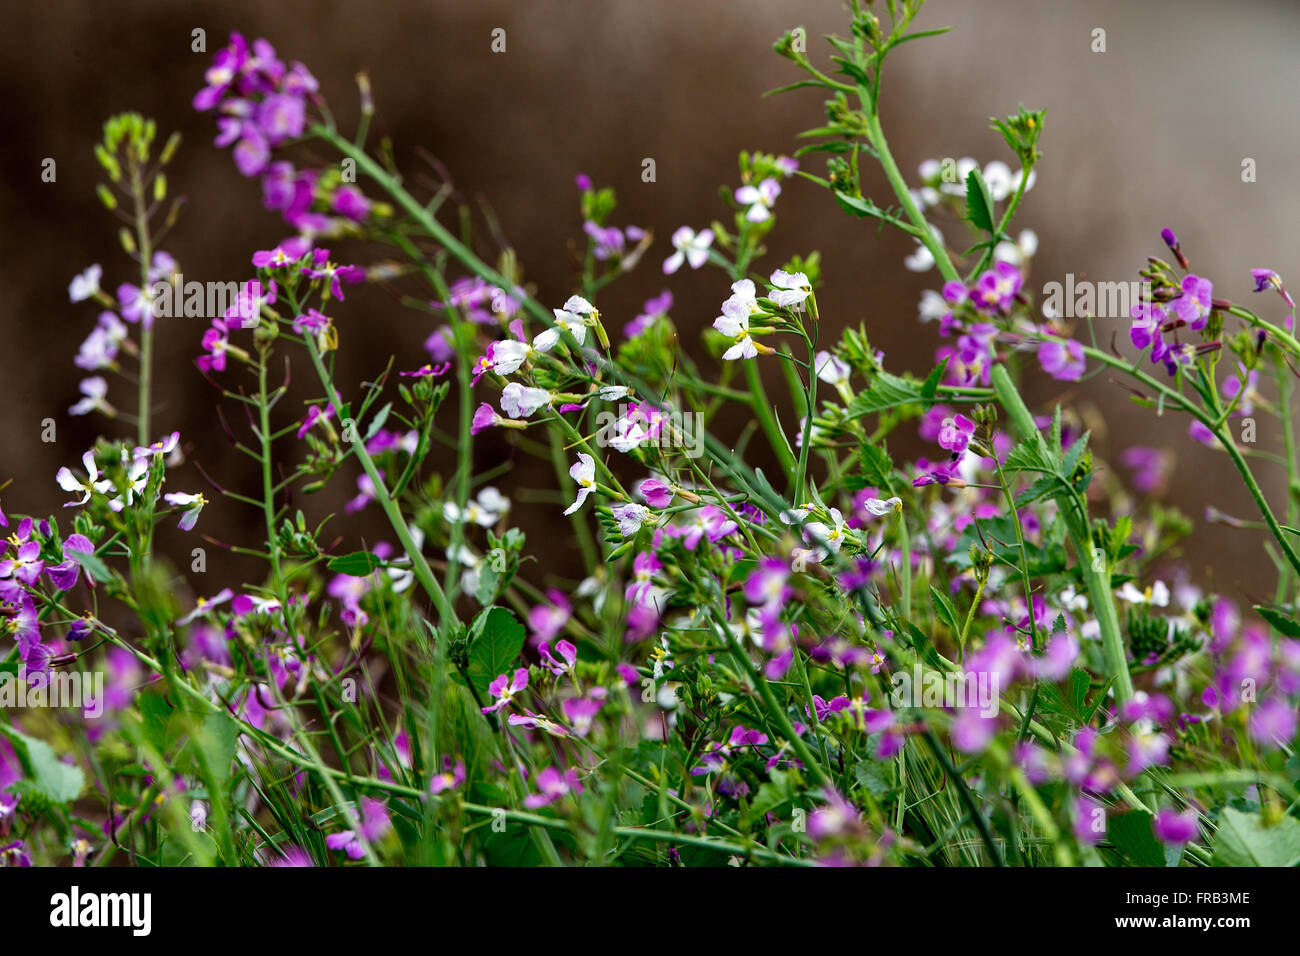 Wild radish (Raphanus raphanistrum) purple and white flowers, Palo Alto, California, United States of America Stock Photo